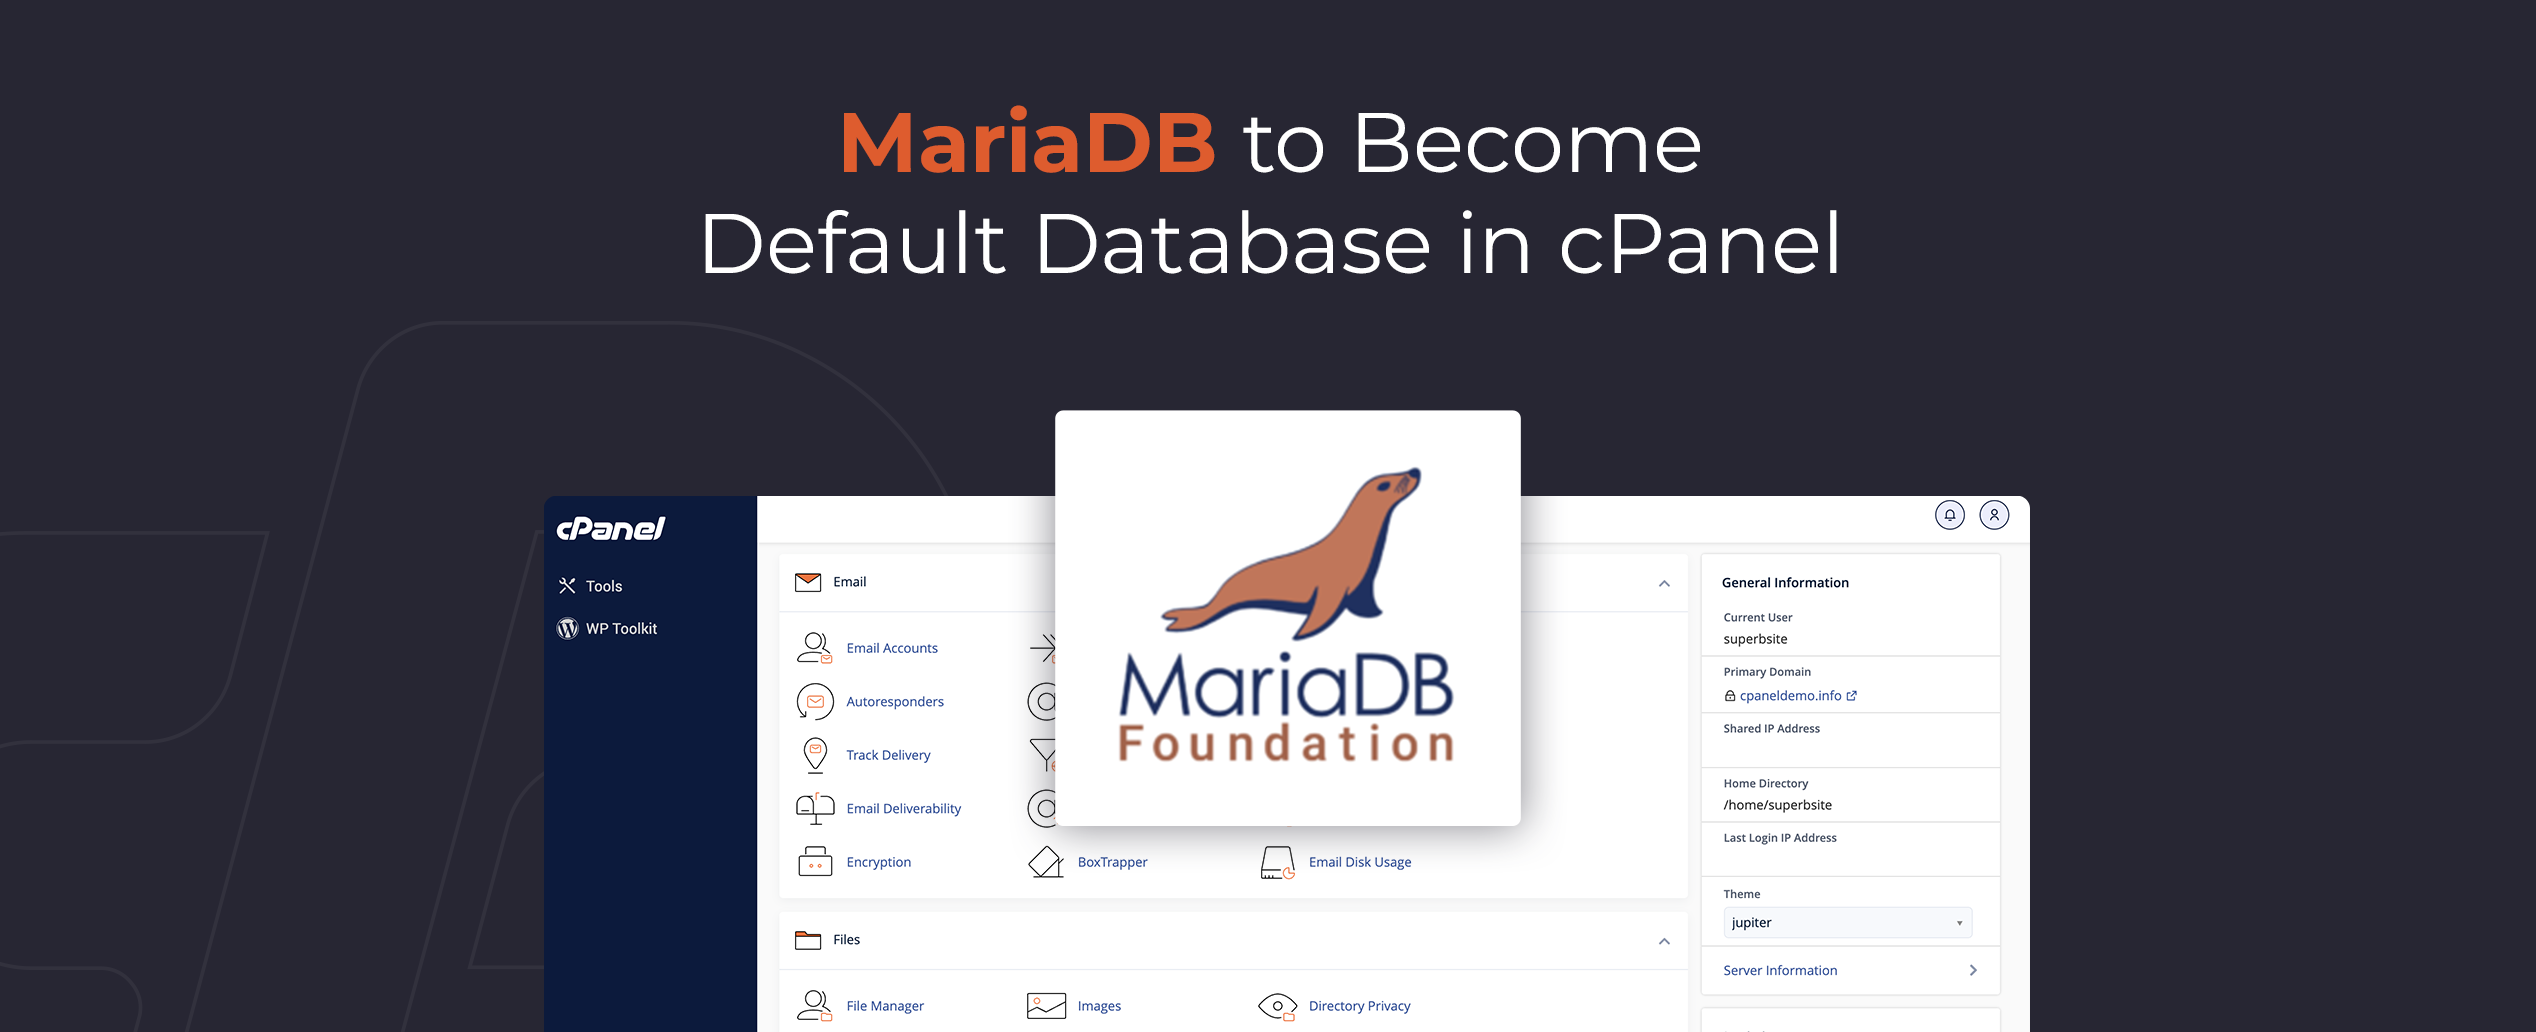 MariaDB default database in cPanel